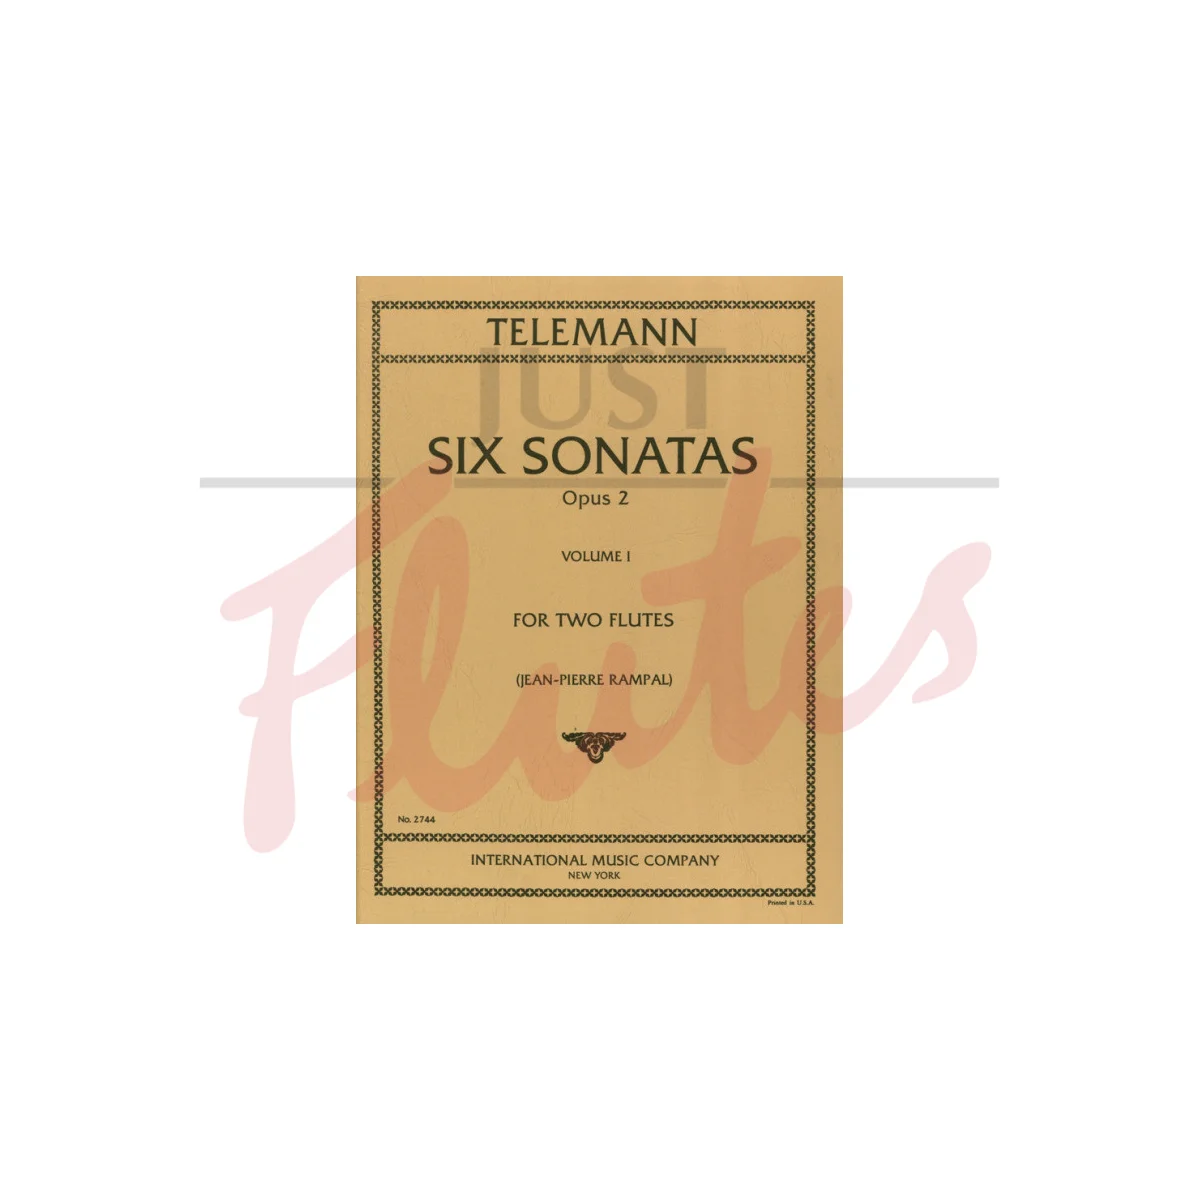 Six Sonatas for Two Flutes, Vol. 1